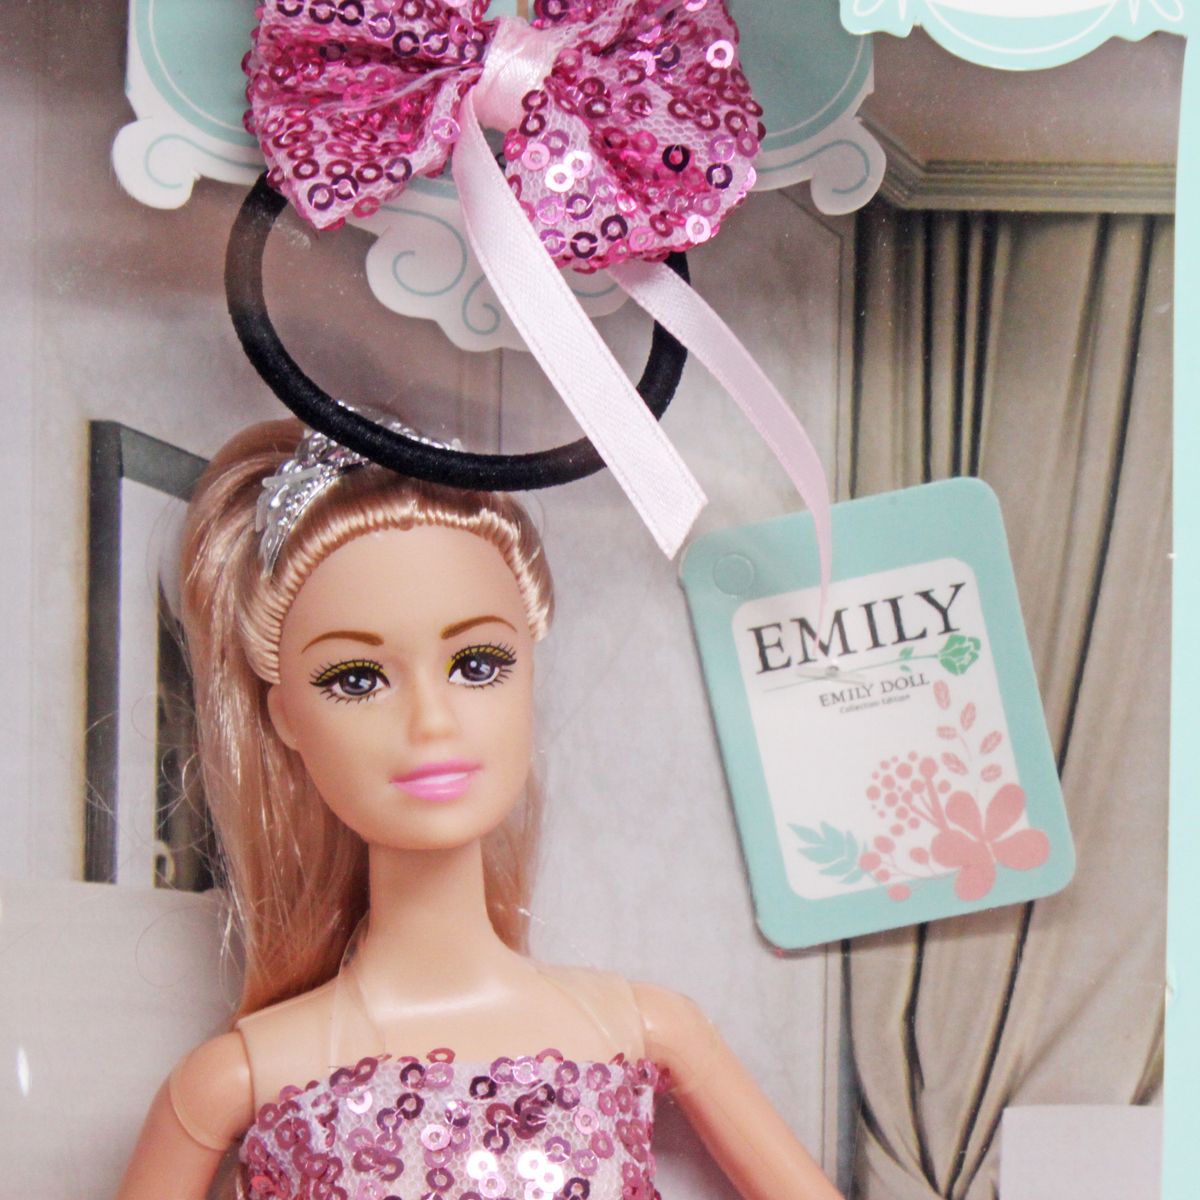 Кукла "Emily" с нарядом для ребенка